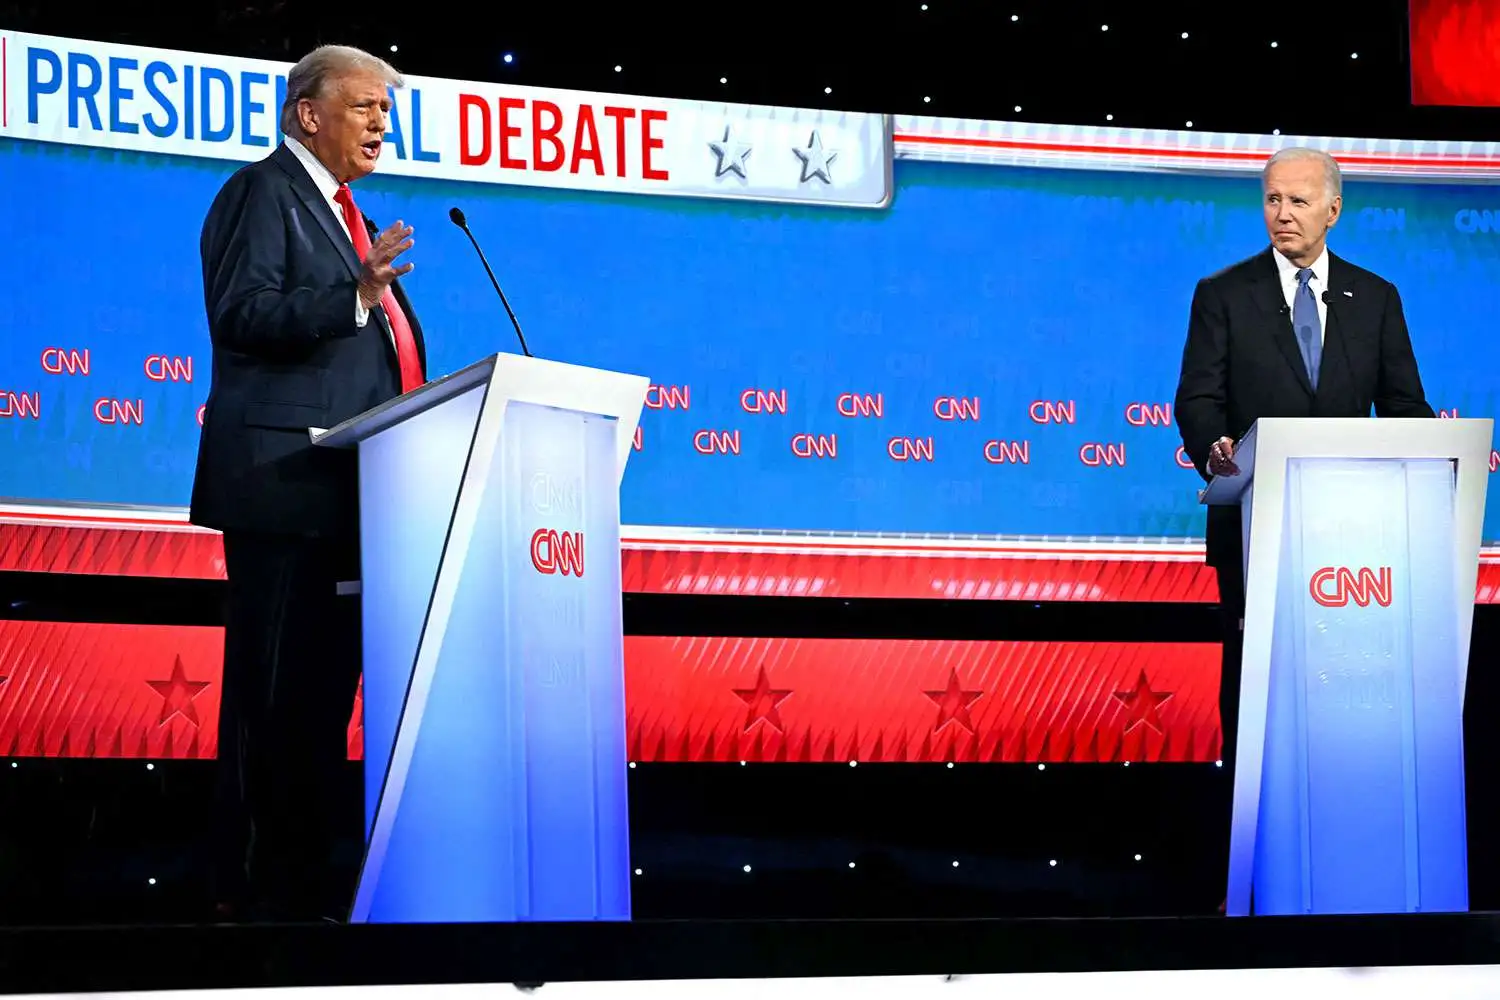 stumbling-joe-biden-fierce-donald-trump-go-head-to-head-in-a-presidential-debate